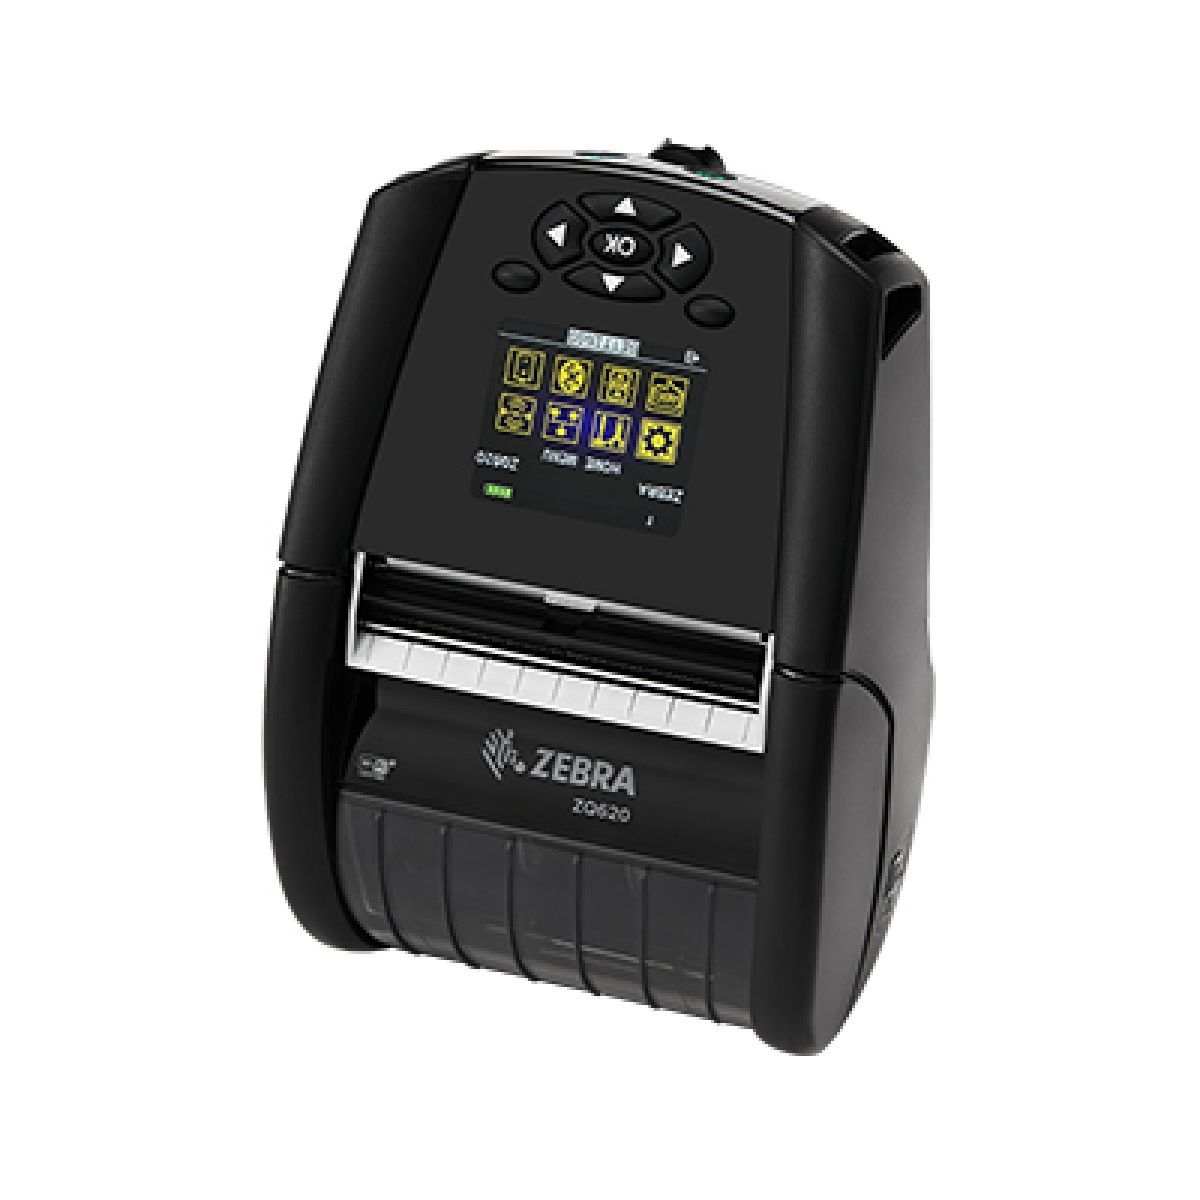 Zebra Zq600 Series Label Printer For Mobile Applications 2345